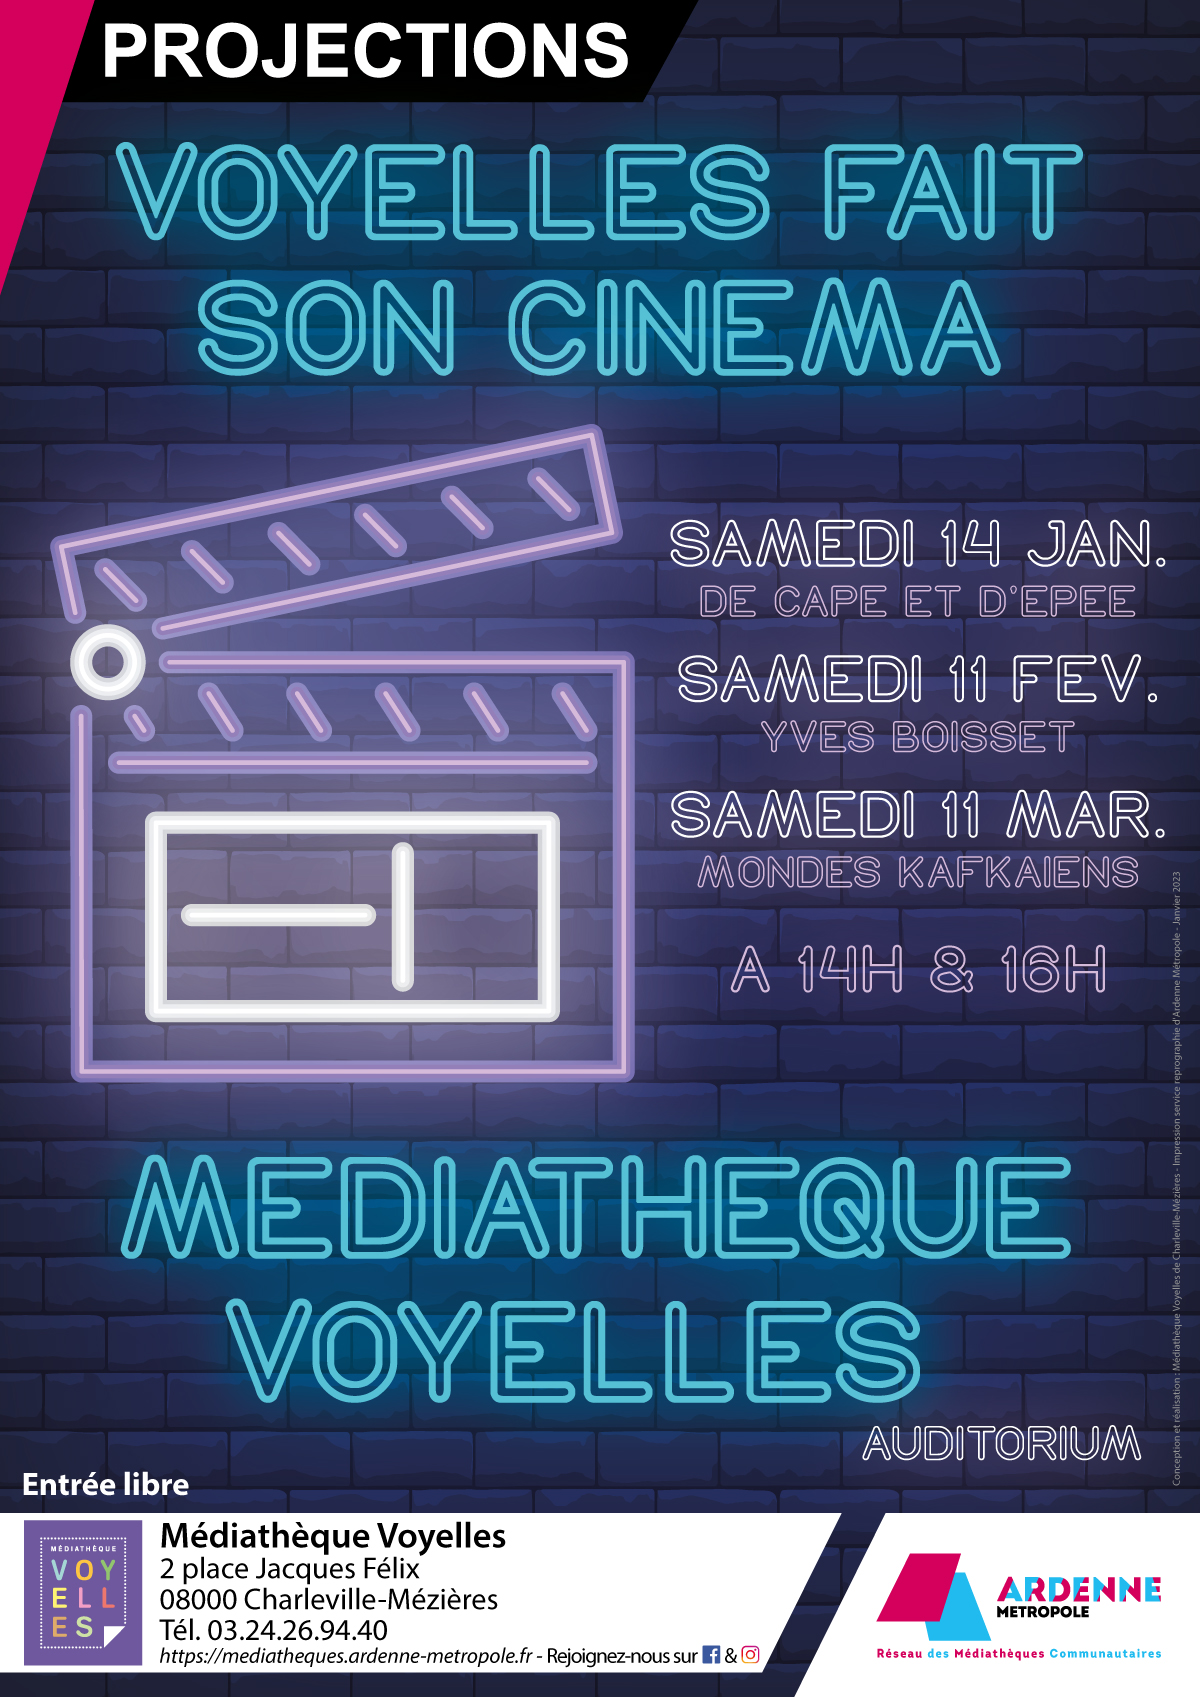 Voyelles fait son cinema Janvier 2022